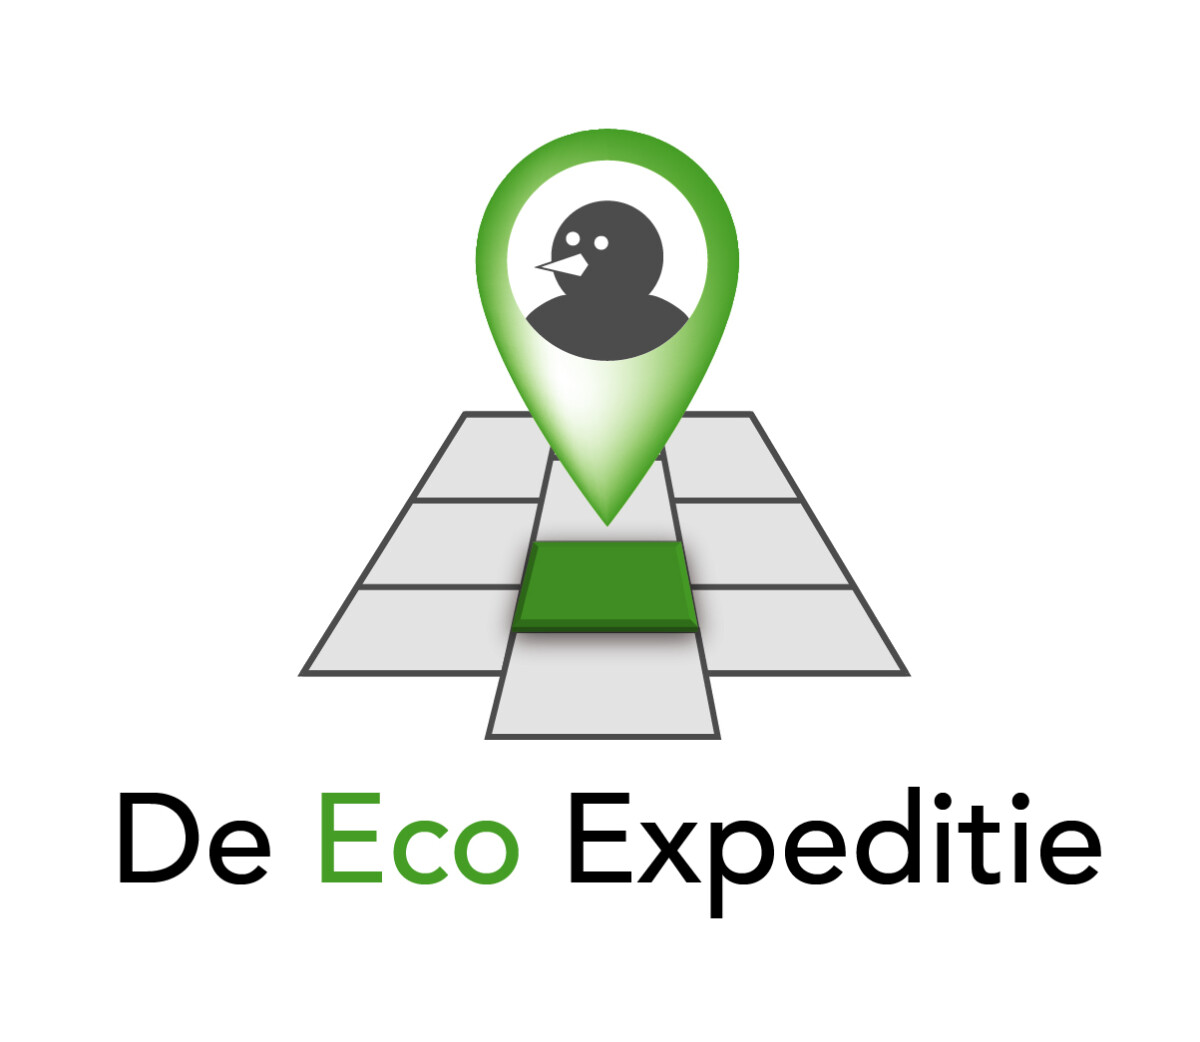 De Eco Expeditie